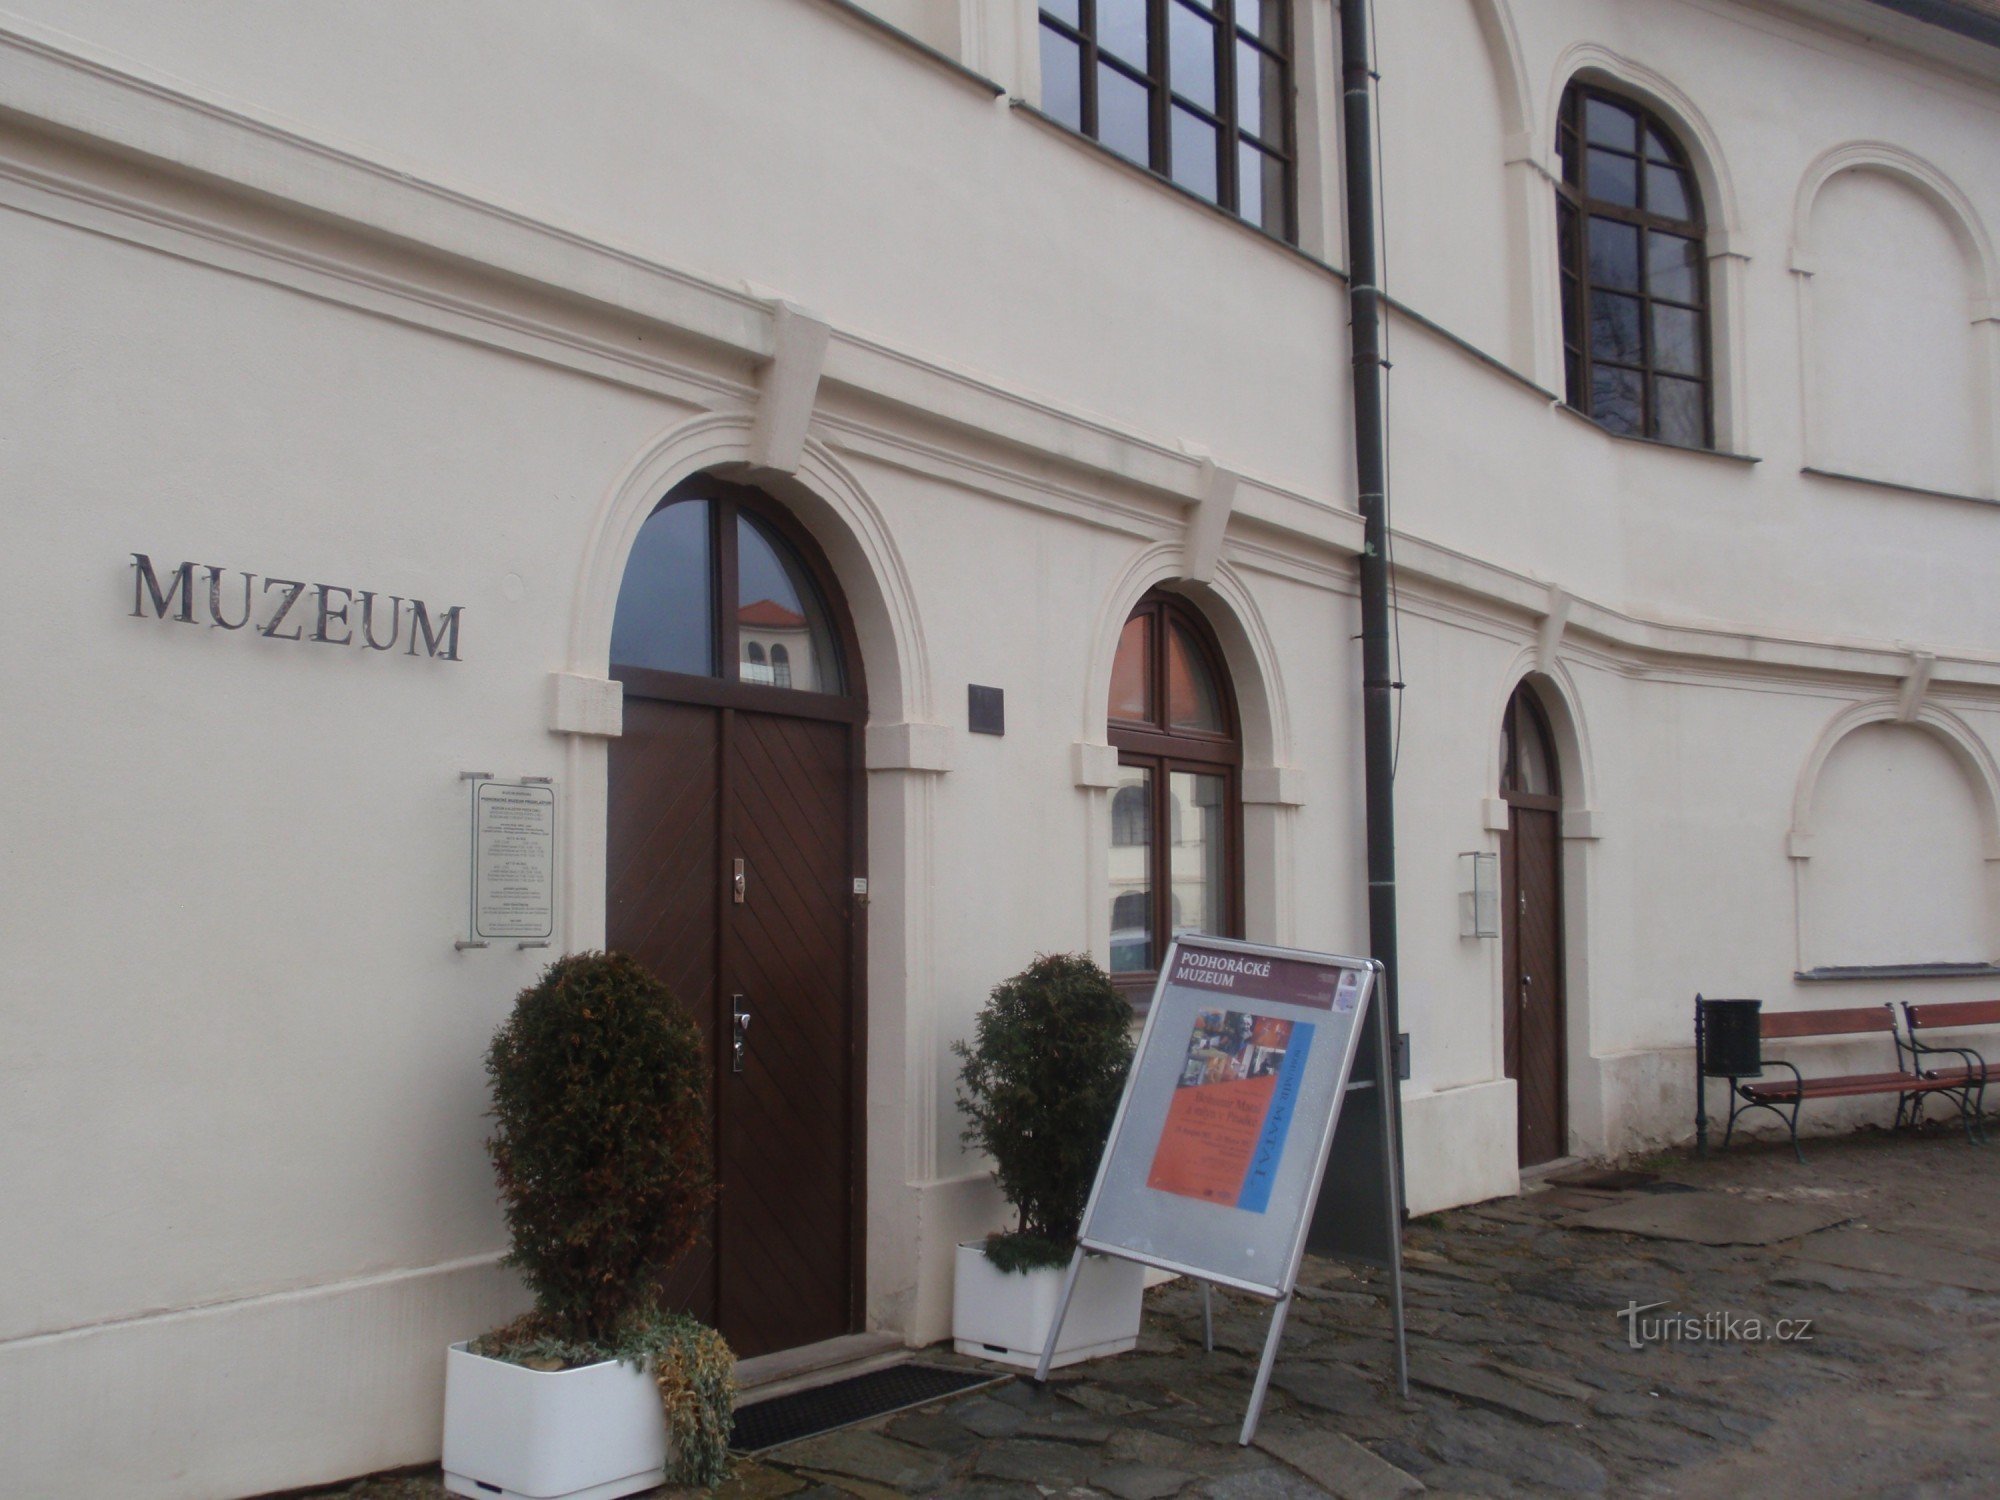 Bảo tàng Podhoráck ở Předklášteří gần Tišnov